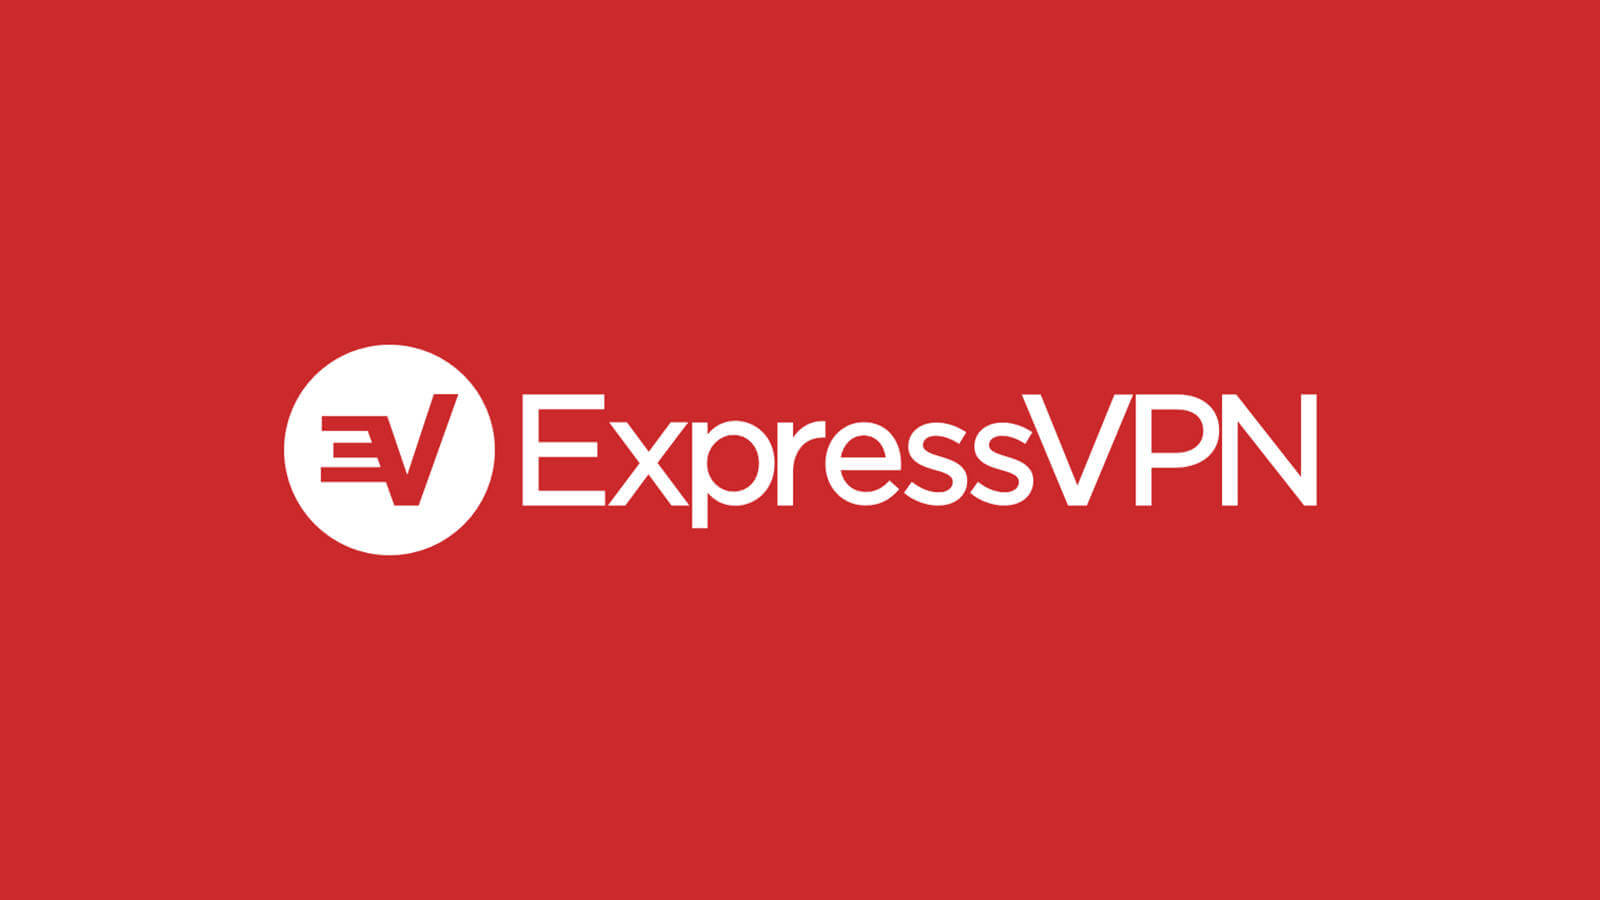 Express VPN Mod Apk Hack Download No Root Required, No Jailbreaking